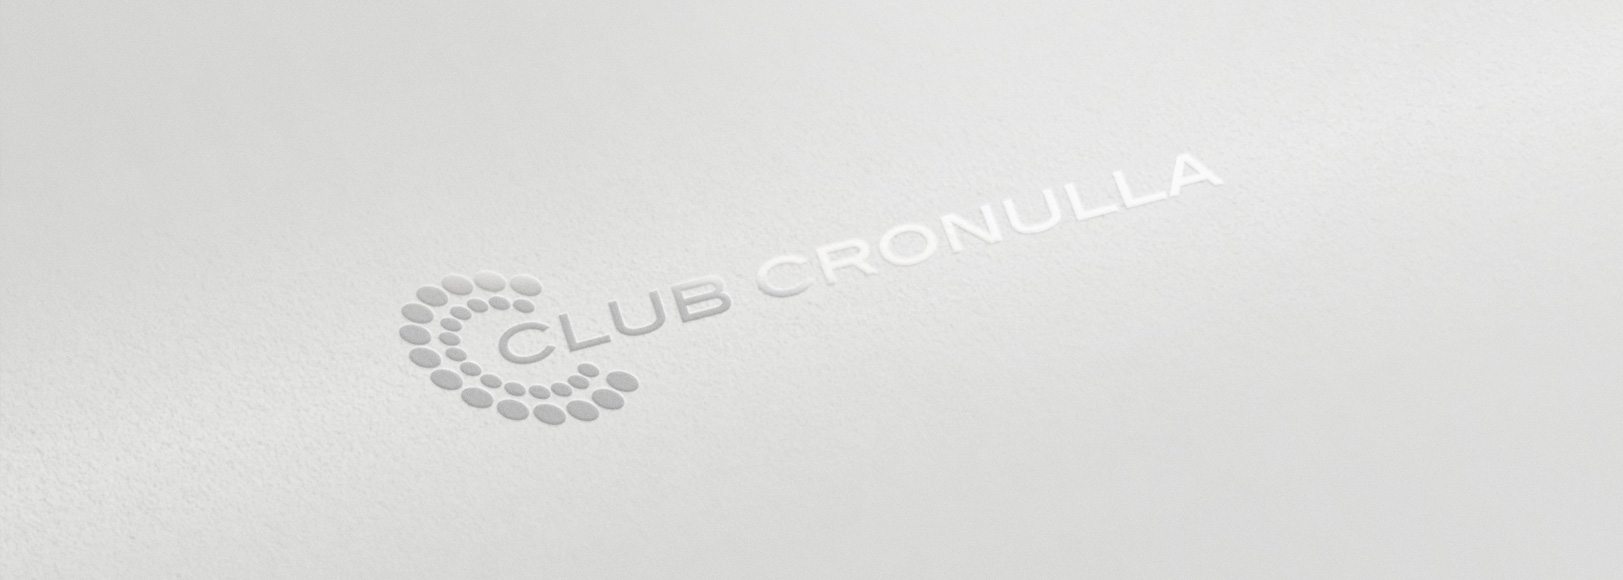 Club Cronulla - Cronulla Web Design - Branding & Logo Design